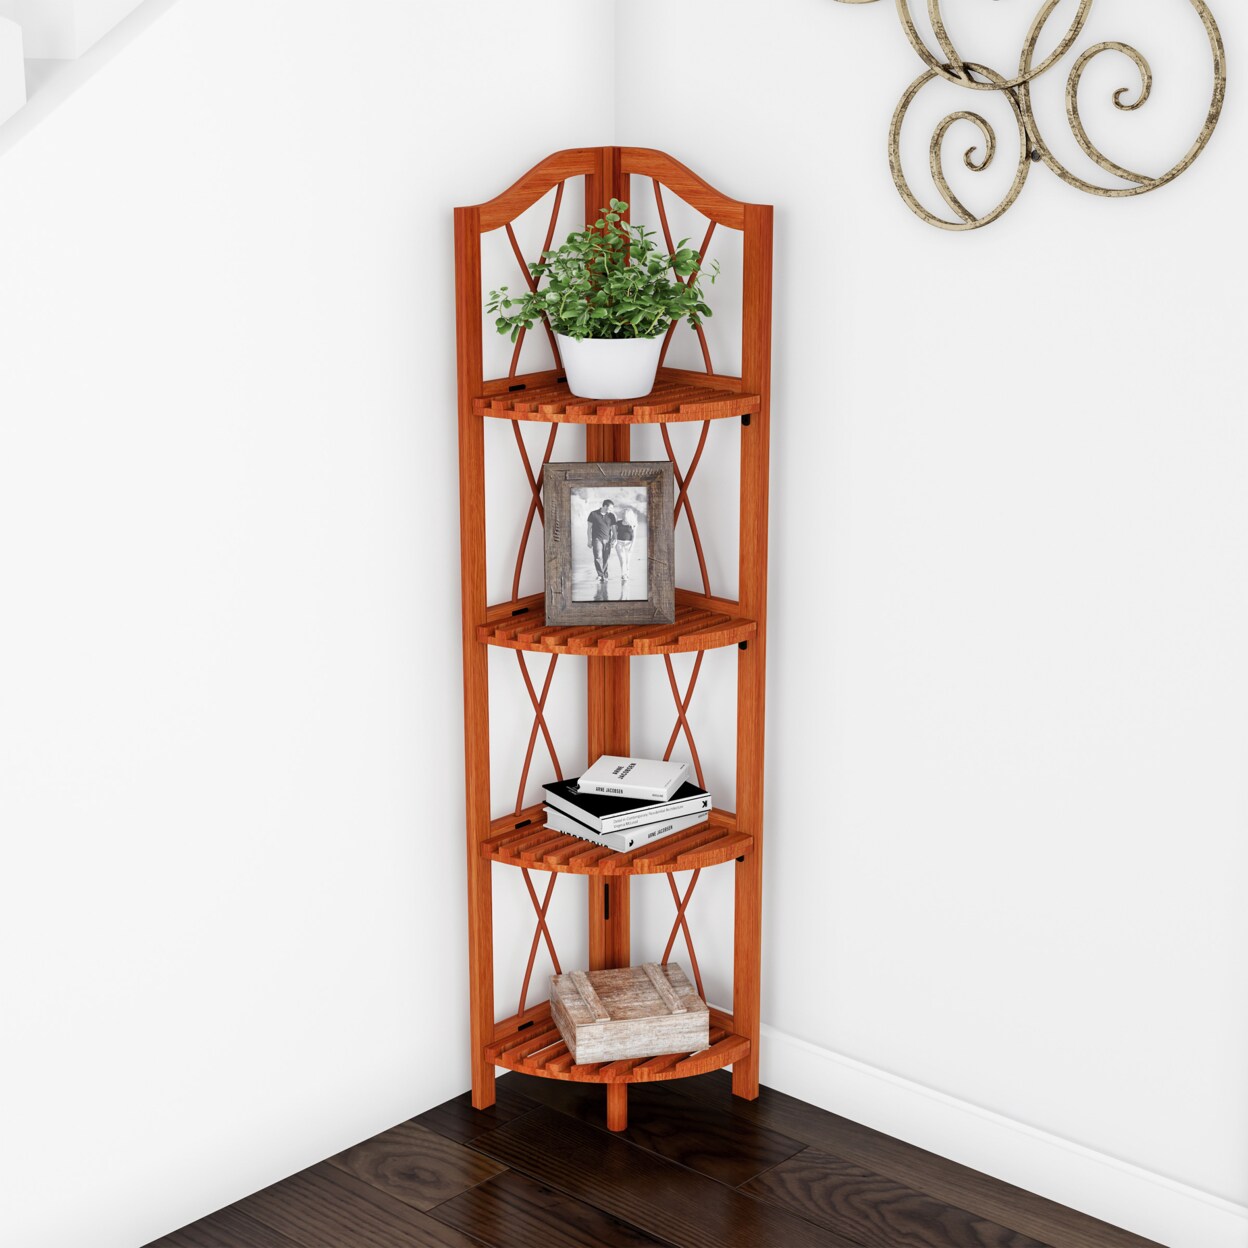 Lavish Home Folding Corner Shelf- 4 Tier Wooden Bookcase- For Display Shelving for Living Room Bathroom Kitchen or Office